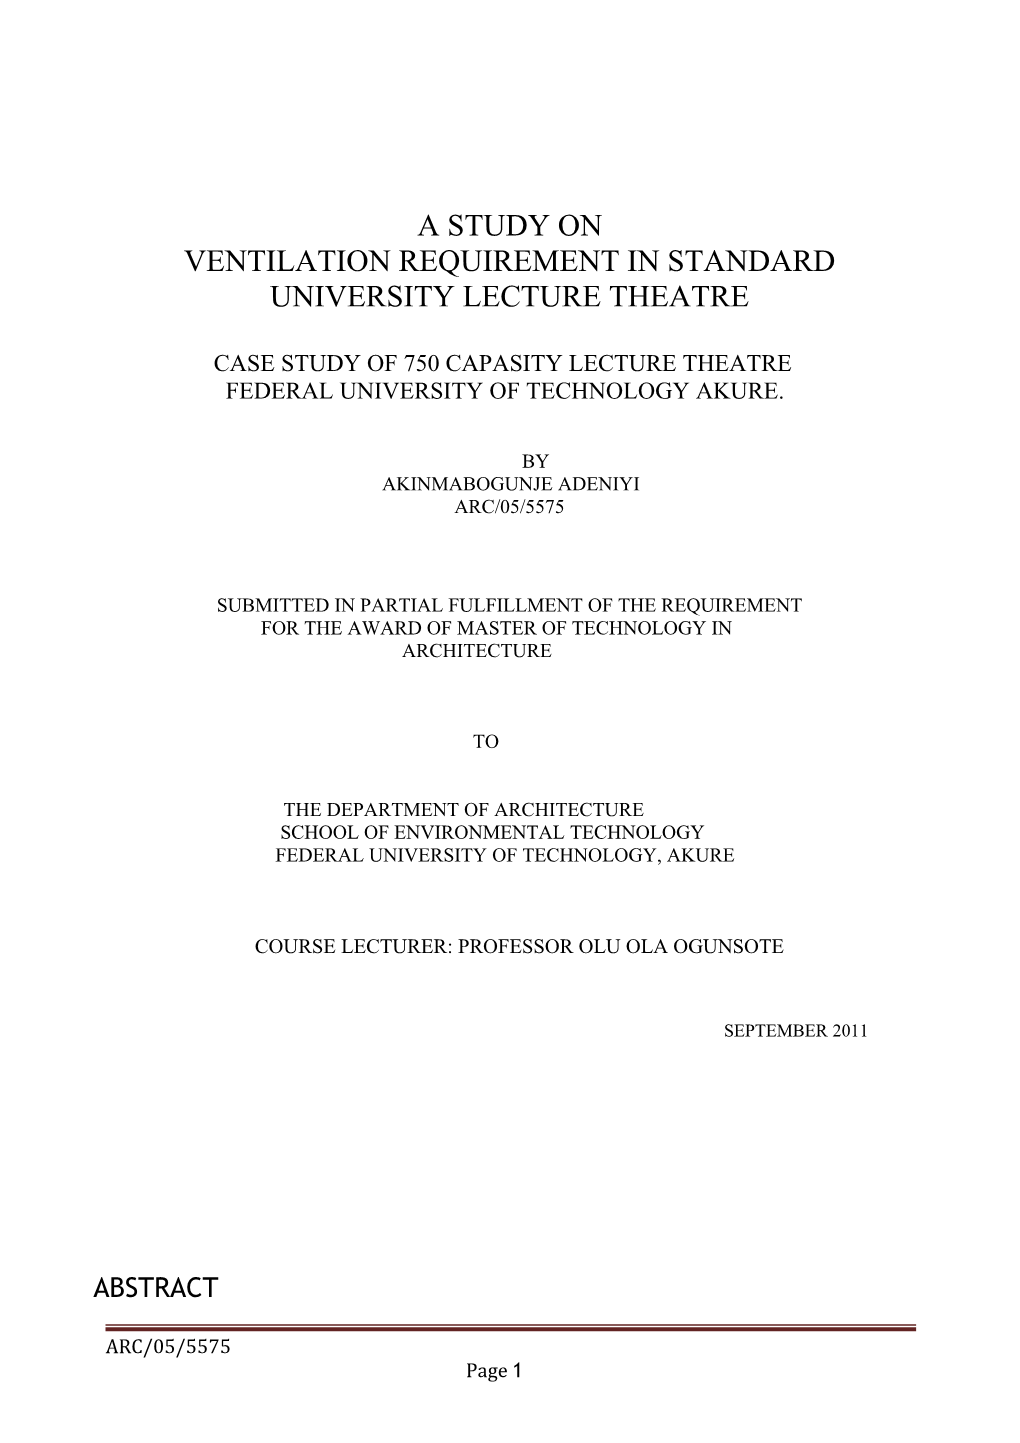 Ventilation Requirement in Standard University Lecture Theatre